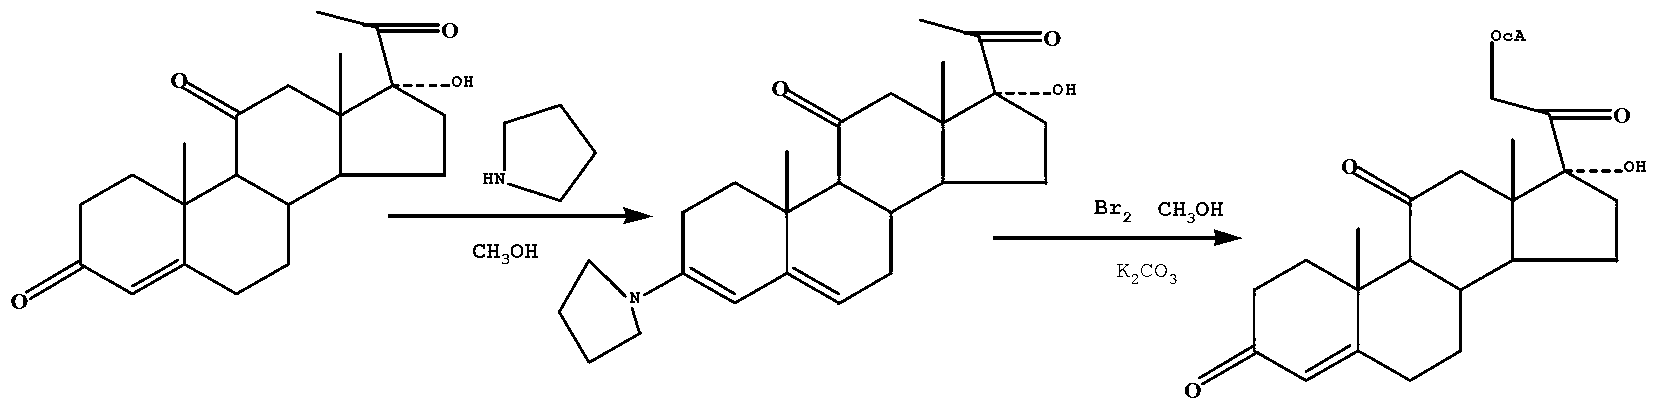 Preparation method of cortisone acetate